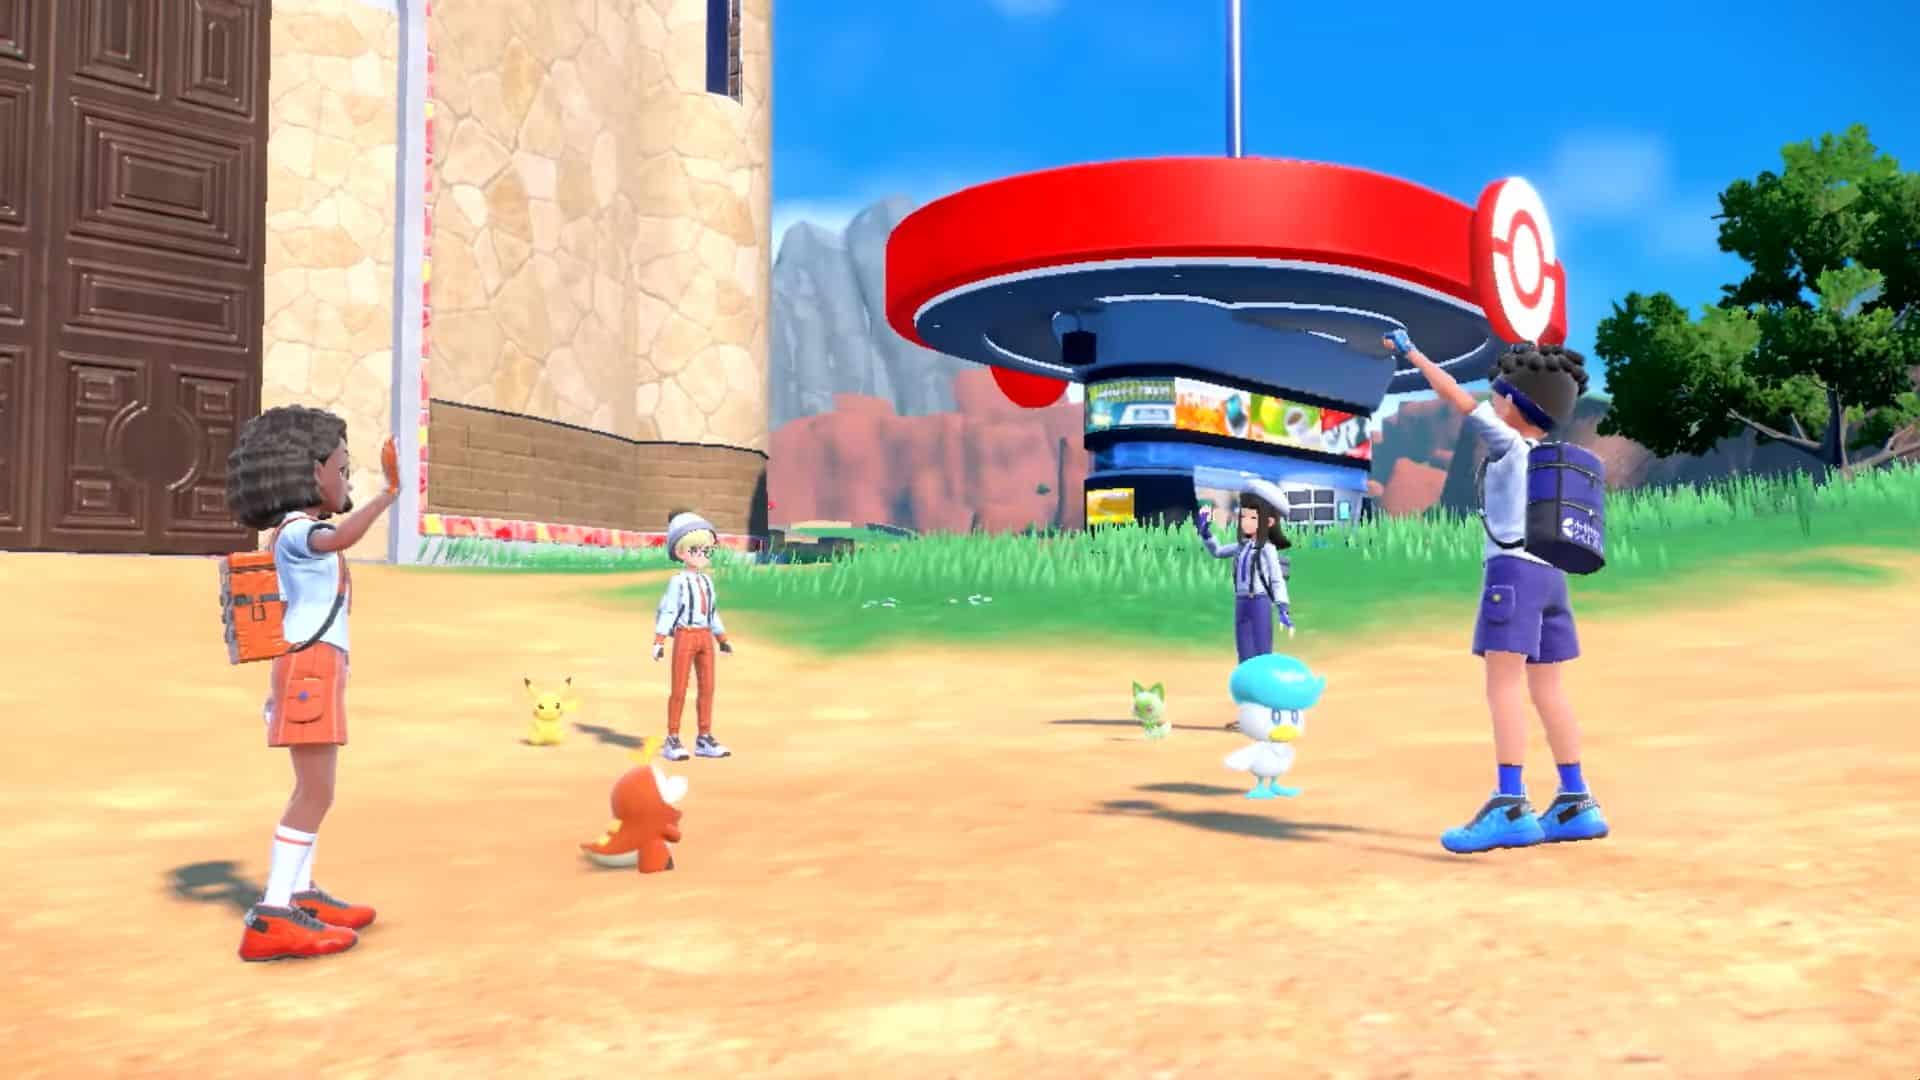 Pokémon Scarlet & Violet Release Date Trailer Has 4-Player Multiplayer